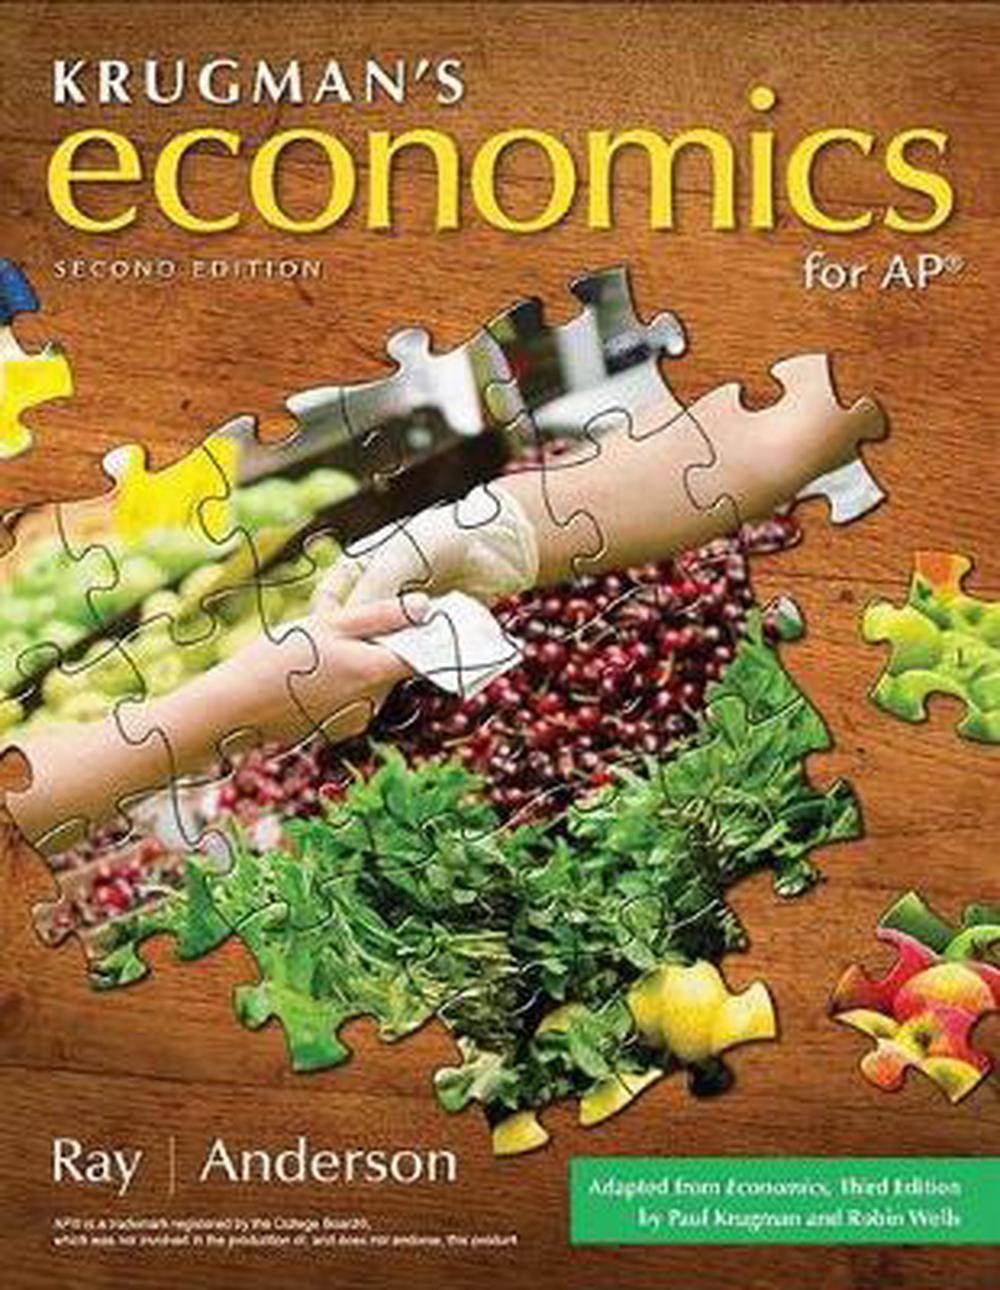 Krugman's Economics for Ap* by Paul Krugman Hardcover Book Free Shipping! 9781464122187 eBay